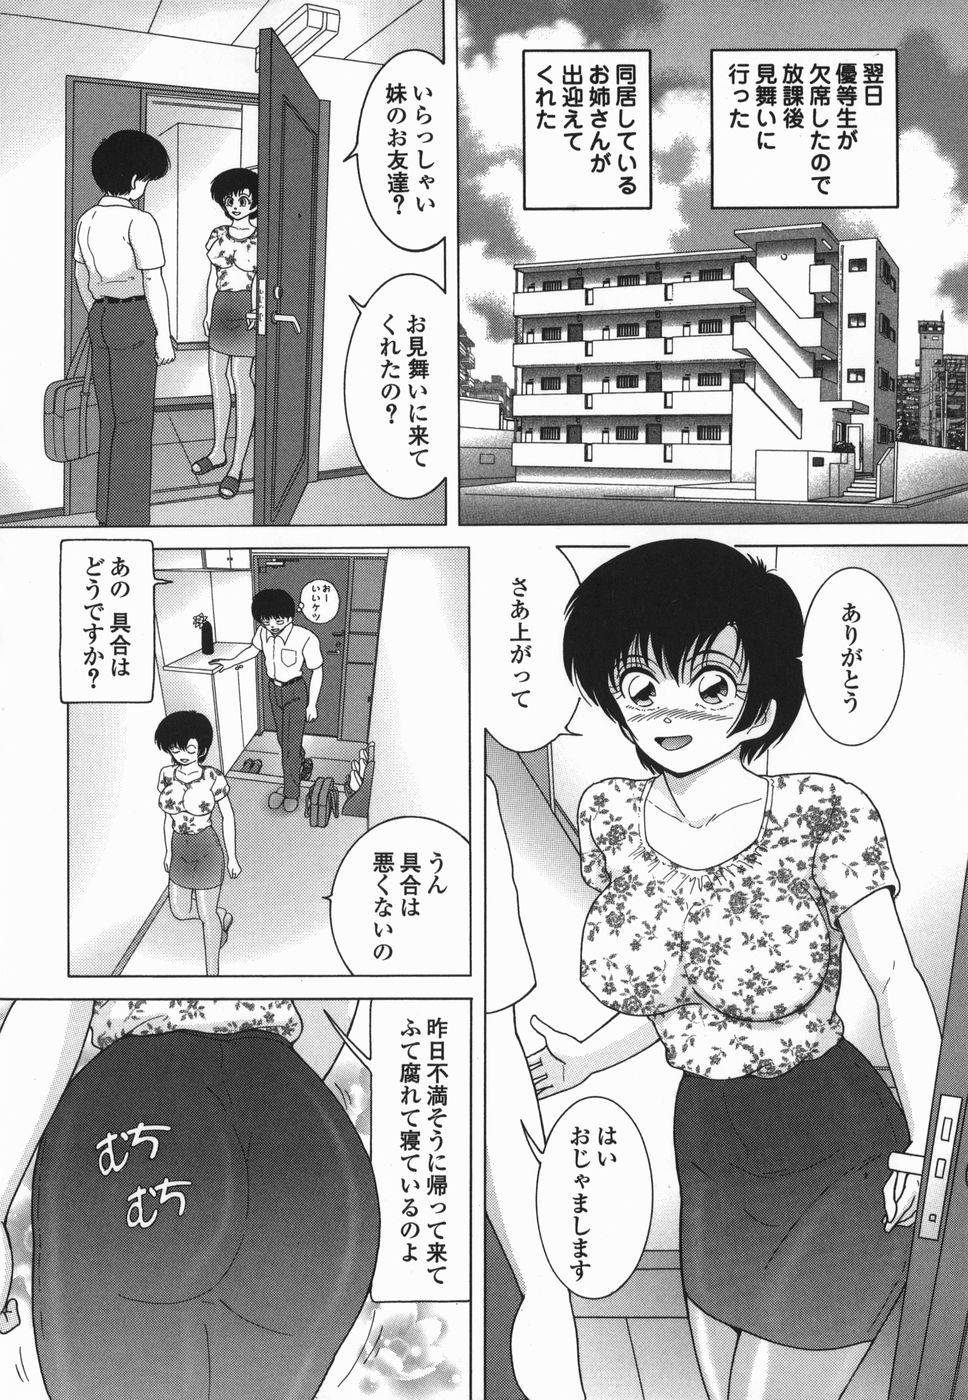 Jogakusei Maetsu no Kyoukasho - The Schoolgirl With Shameful Textbook. 41